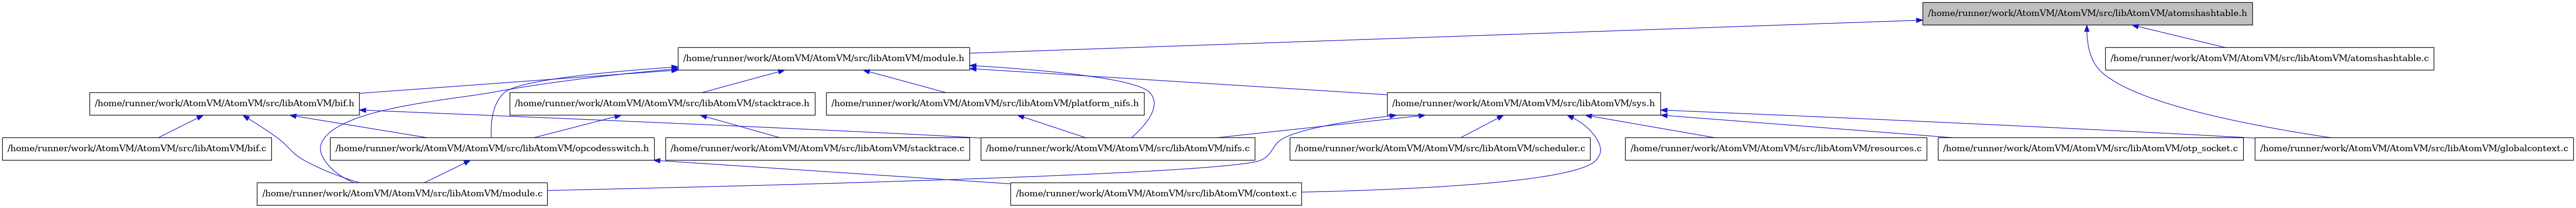 digraph {
    graph [bgcolor="#00000000"]
    node [shape=rectangle style=filled fillcolor="#FFFFFF" font=Helvetica padding=2]
    edge [color="#1414CE"]
    "6" [label="/home/runner/work/AtomVM/AtomVM/src/libAtomVM/bif.c" tooltip="/home/runner/work/AtomVM/AtomVM/src/libAtomVM/bif.c"]
    "5" [label="/home/runner/work/AtomVM/AtomVM/src/libAtomVM/bif.h" tooltip="/home/runner/work/AtomVM/AtomVM/src/libAtomVM/bif.h"]
    "11" [label="/home/runner/work/AtomVM/AtomVM/src/libAtomVM/platform_nifs.h" tooltip="/home/runner/work/AtomVM/AtomVM/src/libAtomVM/platform_nifs.h"]
    "17" [label="/home/runner/work/AtomVM/AtomVM/src/libAtomVM/scheduler.c" tooltip="/home/runner/work/AtomVM/AtomVM/src/libAtomVM/scheduler.c"]
    "10" [label="/home/runner/work/AtomVM/AtomVM/src/libAtomVM/context.c" tooltip="/home/runner/work/AtomVM/AtomVM/src/libAtomVM/context.c"]
    "13" [label="/home/runner/work/AtomVM/AtomVM/src/libAtomVM/stacktrace.c" tooltip="/home/runner/work/AtomVM/AtomVM/src/libAtomVM/stacktrace.c"]
    "12" [label="/home/runner/work/AtomVM/AtomVM/src/libAtomVM/stacktrace.h" tooltip="/home/runner/work/AtomVM/AtomVM/src/libAtomVM/stacktrace.h"]
    "7" [label="/home/runner/work/AtomVM/AtomVM/src/libAtomVM/module.c" tooltip="/home/runner/work/AtomVM/AtomVM/src/libAtomVM/module.c"]
    "4" [label="/home/runner/work/AtomVM/AtomVM/src/libAtomVM/module.h" tooltip="/home/runner/work/AtomVM/AtomVM/src/libAtomVM/module.h"]
    "16" [label="/home/runner/work/AtomVM/AtomVM/src/libAtomVM/resources.c" tooltip="/home/runner/work/AtomVM/AtomVM/src/libAtomVM/resources.c"]
    "14" [label="/home/runner/work/AtomVM/AtomVM/src/libAtomVM/sys.h" tooltip="/home/runner/work/AtomVM/AtomVM/src/libAtomVM/sys.h"]
    "2" [label="/home/runner/work/AtomVM/AtomVM/src/libAtomVM/atomshashtable.c" tooltip="/home/runner/work/AtomVM/AtomVM/src/libAtomVM/atomshashtable.c"]
    "1" [label="/home/runner/work/AtomVM/AtomVM/src/libAtomVM/atomshashtable.h" tooltip="/home/runner/work/AtomVM/AtomVM/src/libAtomVM/atomshashtable.h" fillcolor="#BFBFBF"]
    "8" [label="/home/runner/work/AtomVM/AtomVM/src/libAtomVM/nifs.c" tooltip="/home/runner/work/AtomVM/AtomVM/src/libAtomVM/nifs.c"]
    "9" [label="/home/runner/work/AtomVM/AtomVM/src/libAtomVM/opcodesswitch.h" tooltip="/home/runner/work/AtomVM/AtomVM/src/libAtomVM/opcodesswitch.h"]
    "3" [label="/home/runner/work/AtomVM/AtomVM/src/libAtomVM/globalcontext.c" tooltip="/home/runner/work/AtomVM/AtomVM/src/libAtomVM/globalcontext.c"]
    "15" [label="/home/runner/work/AtomVM/AtomVM/src/libAtomVM/otp_socket.c" tooltip="/home/runner/work/AtomVM/AtomVM/src/libAtomVM/otp_socket.c"]
    "5" -> "6" [dir=back tooltip="include"]
    "5" -> "7" [dir=back tooltip="include"]
    "5" -> "8" [dir=back tooltip="include"]
    "5" -> "9" [dir=back tooltip="include"]
    "11" -> "8" [dir=back tooltip="include"]
    "12" -> "9" [dir=back tooltip="include"]
    "12" -> "13" [dir=back tooltip="include"]
    "4" -> "5" [dir=back tooltip="include"]
    "4" -> "7" [dir=back tooltip="include"]
    "4" -> "8" [dir=back tooltip="include"]
    "4" -> "9" [dir=back tooltip="include"]
    "4" -> "11" [dir=back tooltip="include"]
    "4" -> "12" [dir=back tooltip="include"]
    "4" -> "14" [dir=back tooltip="include"]
    "14" -> "10" [dir=back tooltip="include"]
    "14" -> "3" [dir=back tooltip="include"]
    "14" -> "7" [dir=back tooltip="include"]
    "14" -> "8" [dir=back tooltip="include"]
    "14" -> "15" [dir=back tooltip="include"]
    "14" -> "16" [dir=back tooltip="include"]
    "14" -> "17" [dir=back tooltip="include"]
    "1" -> "2" [dir=back tooltip="include"]
    "1" -> "3" [dir=back tooltip="include"]
    "1" -> "4" [dir=back tooltip="include"]
    "9" -> "10" [dir=back tooltip="include"]
    "9" -> "7" [dir=back tooltip="include"]
}